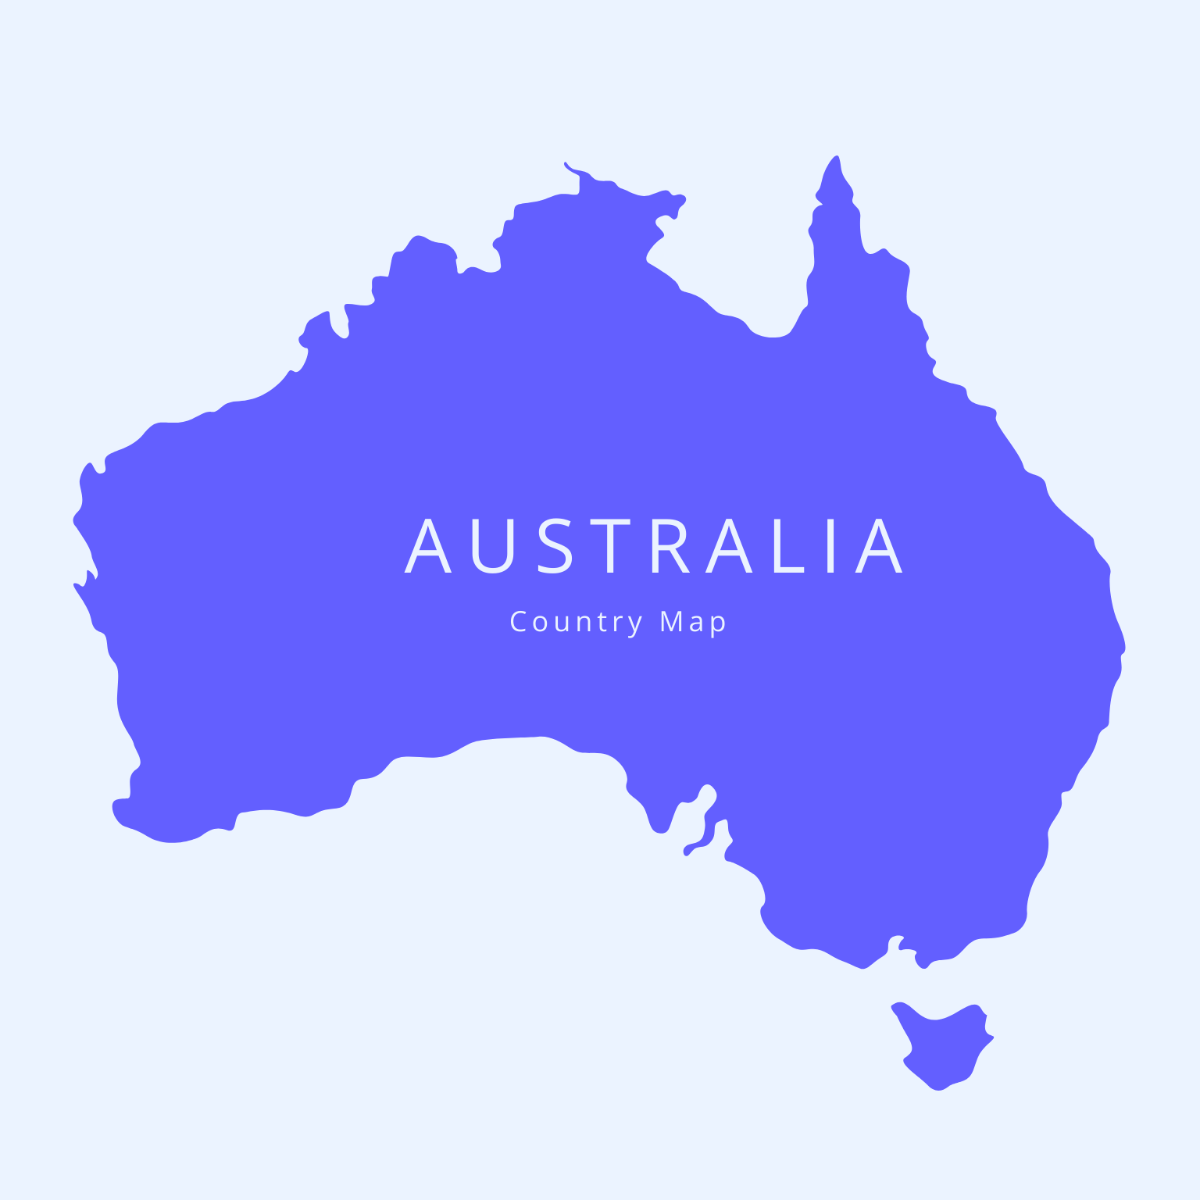 Australia Country Map Vector